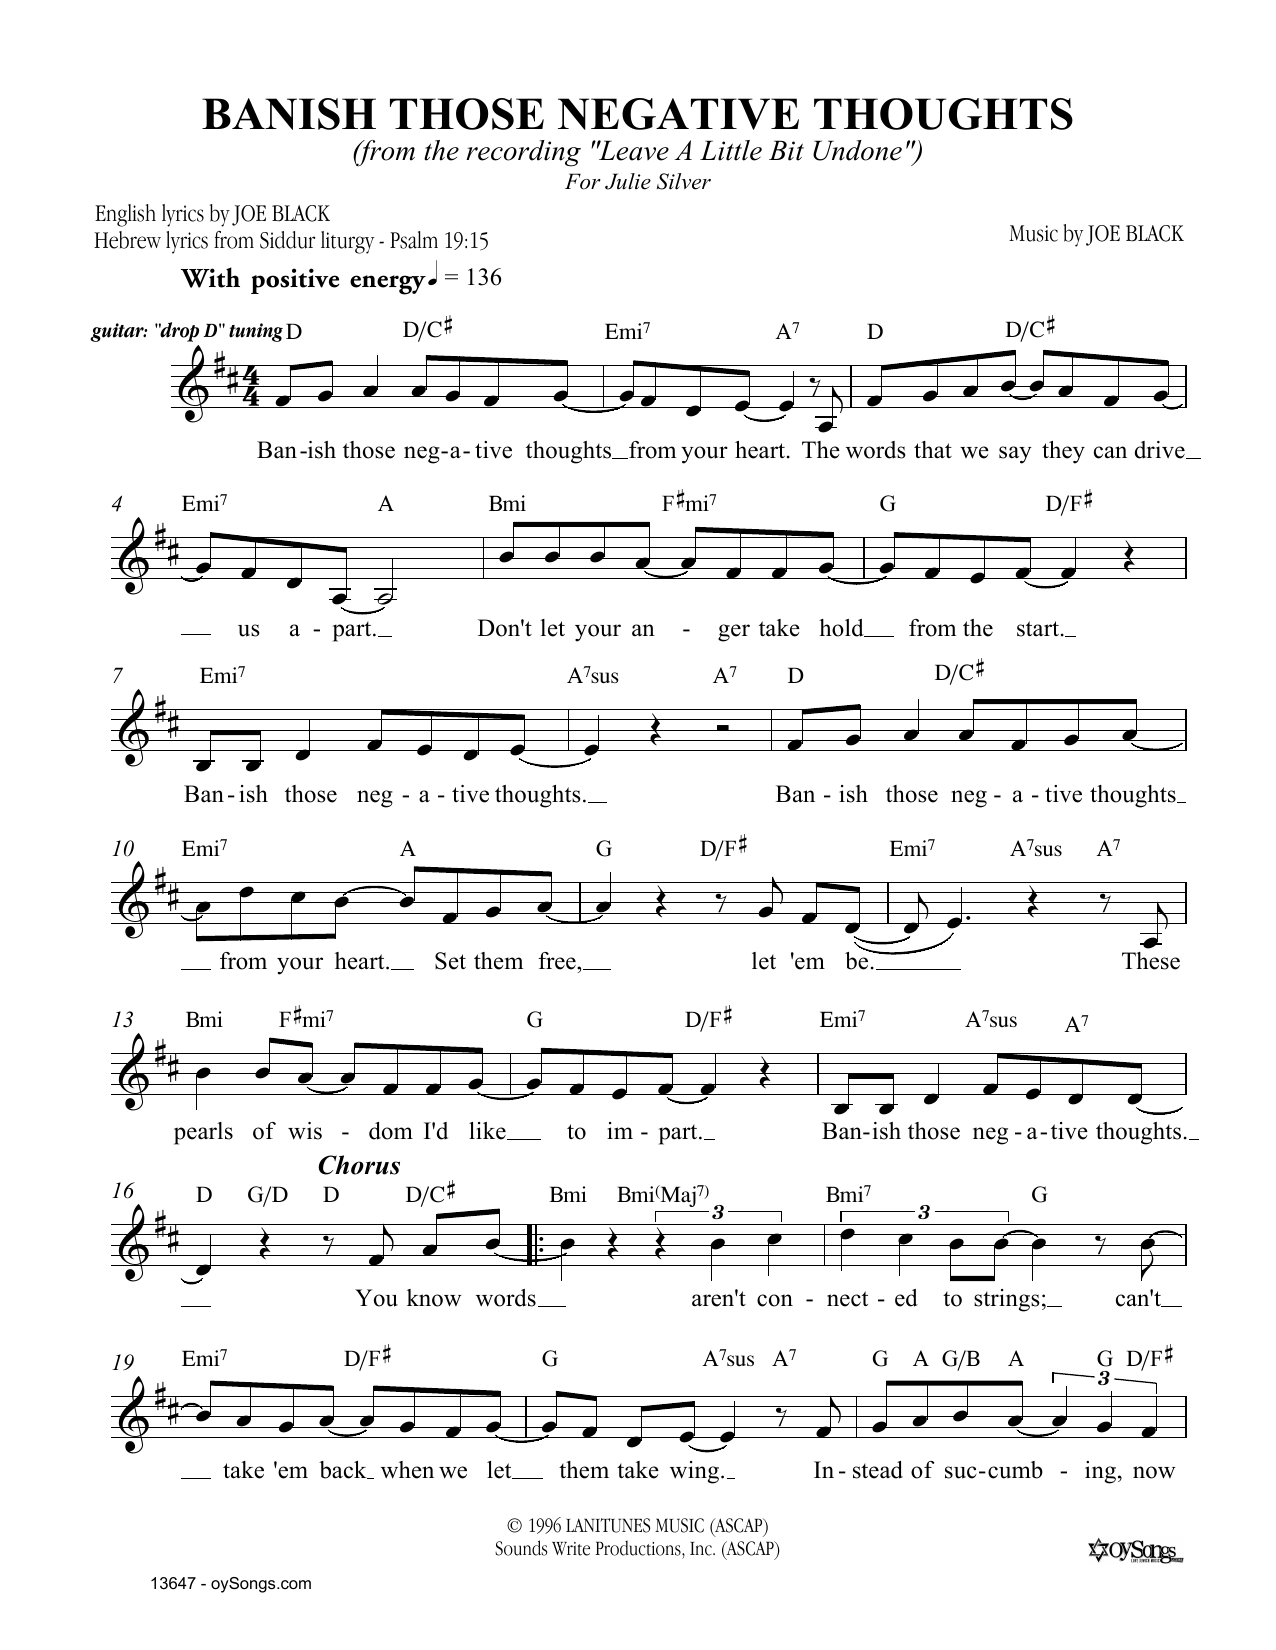 Joe Black Banish Those Negative Thoughts Sheet Music Notes & Chords for Melody Line, Lyrics & Chords - Download or Print PDF